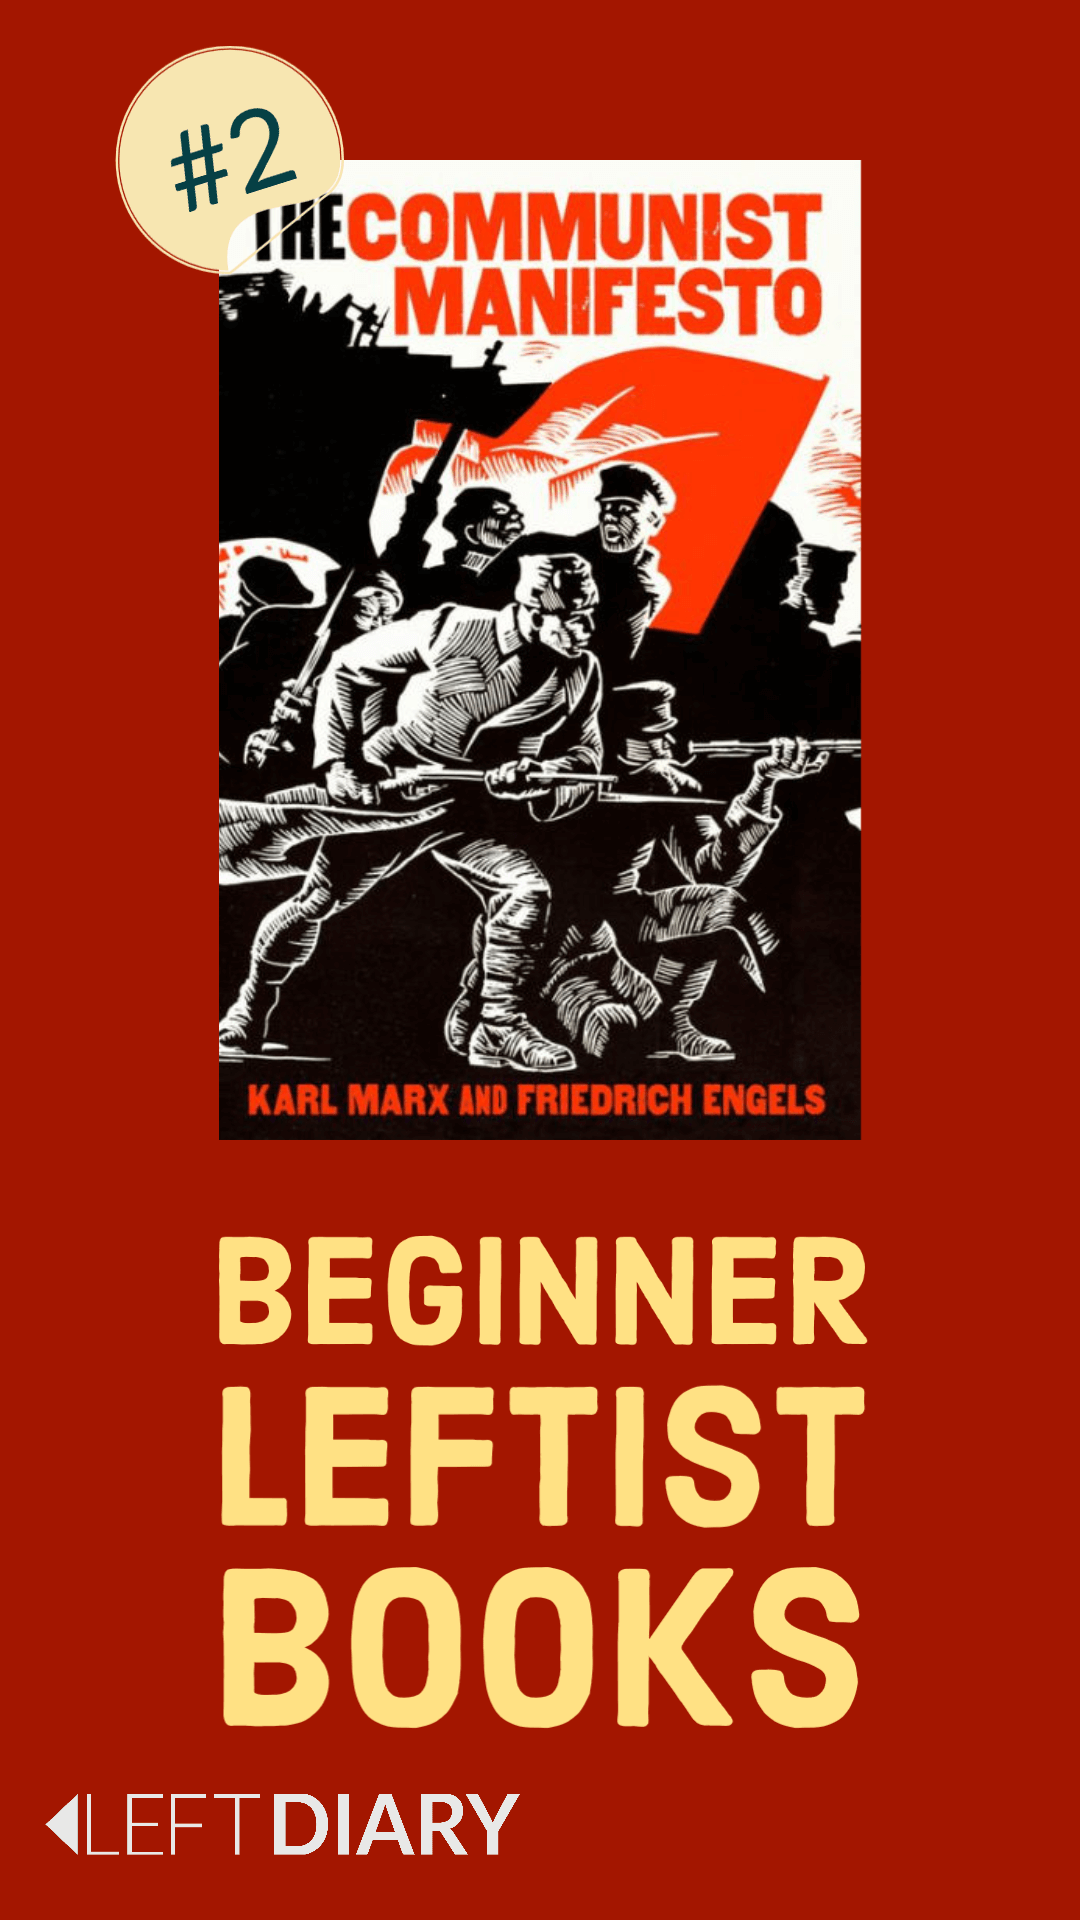 Beginner leftist books Communist manifesto